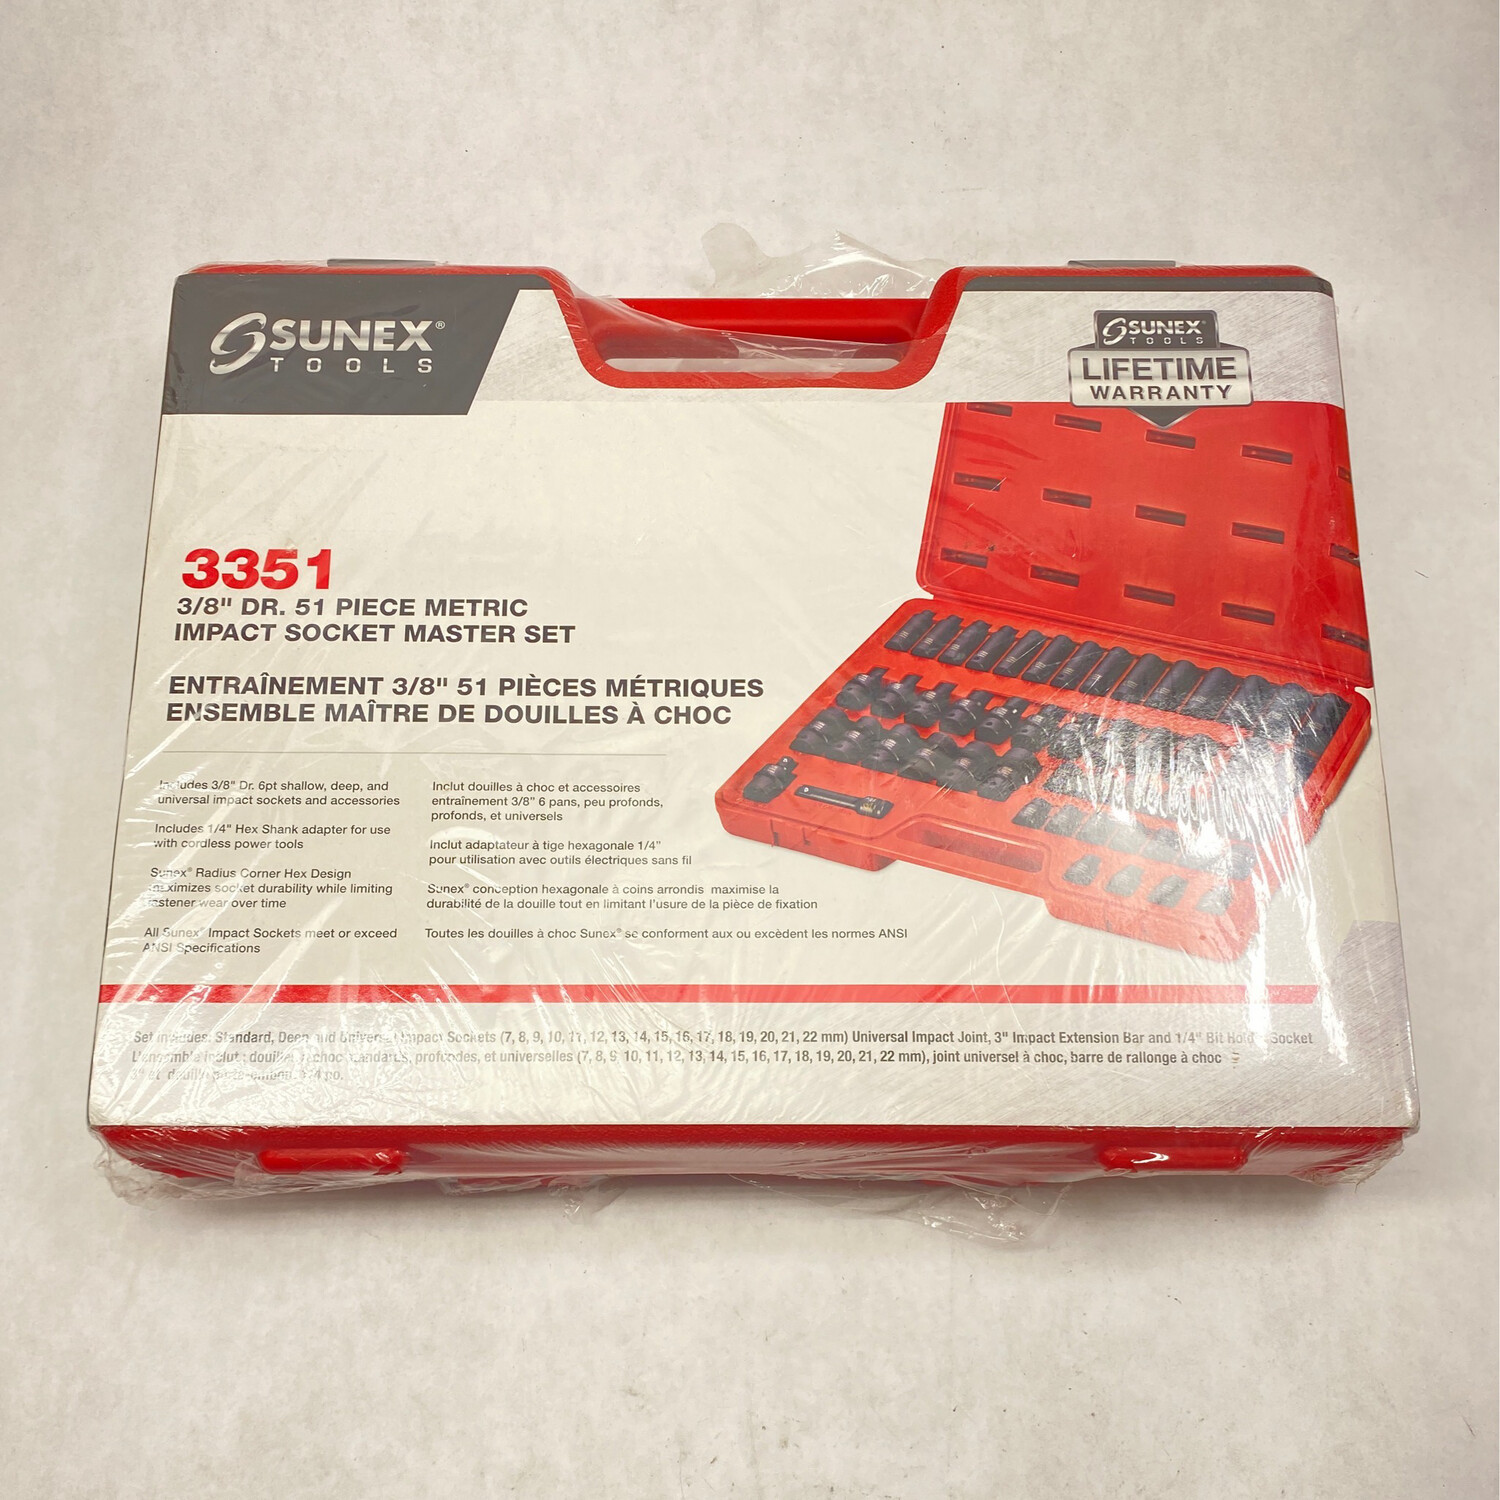 Sunex Tools 3/8” Drive Metric Impact Socket Set, 3351